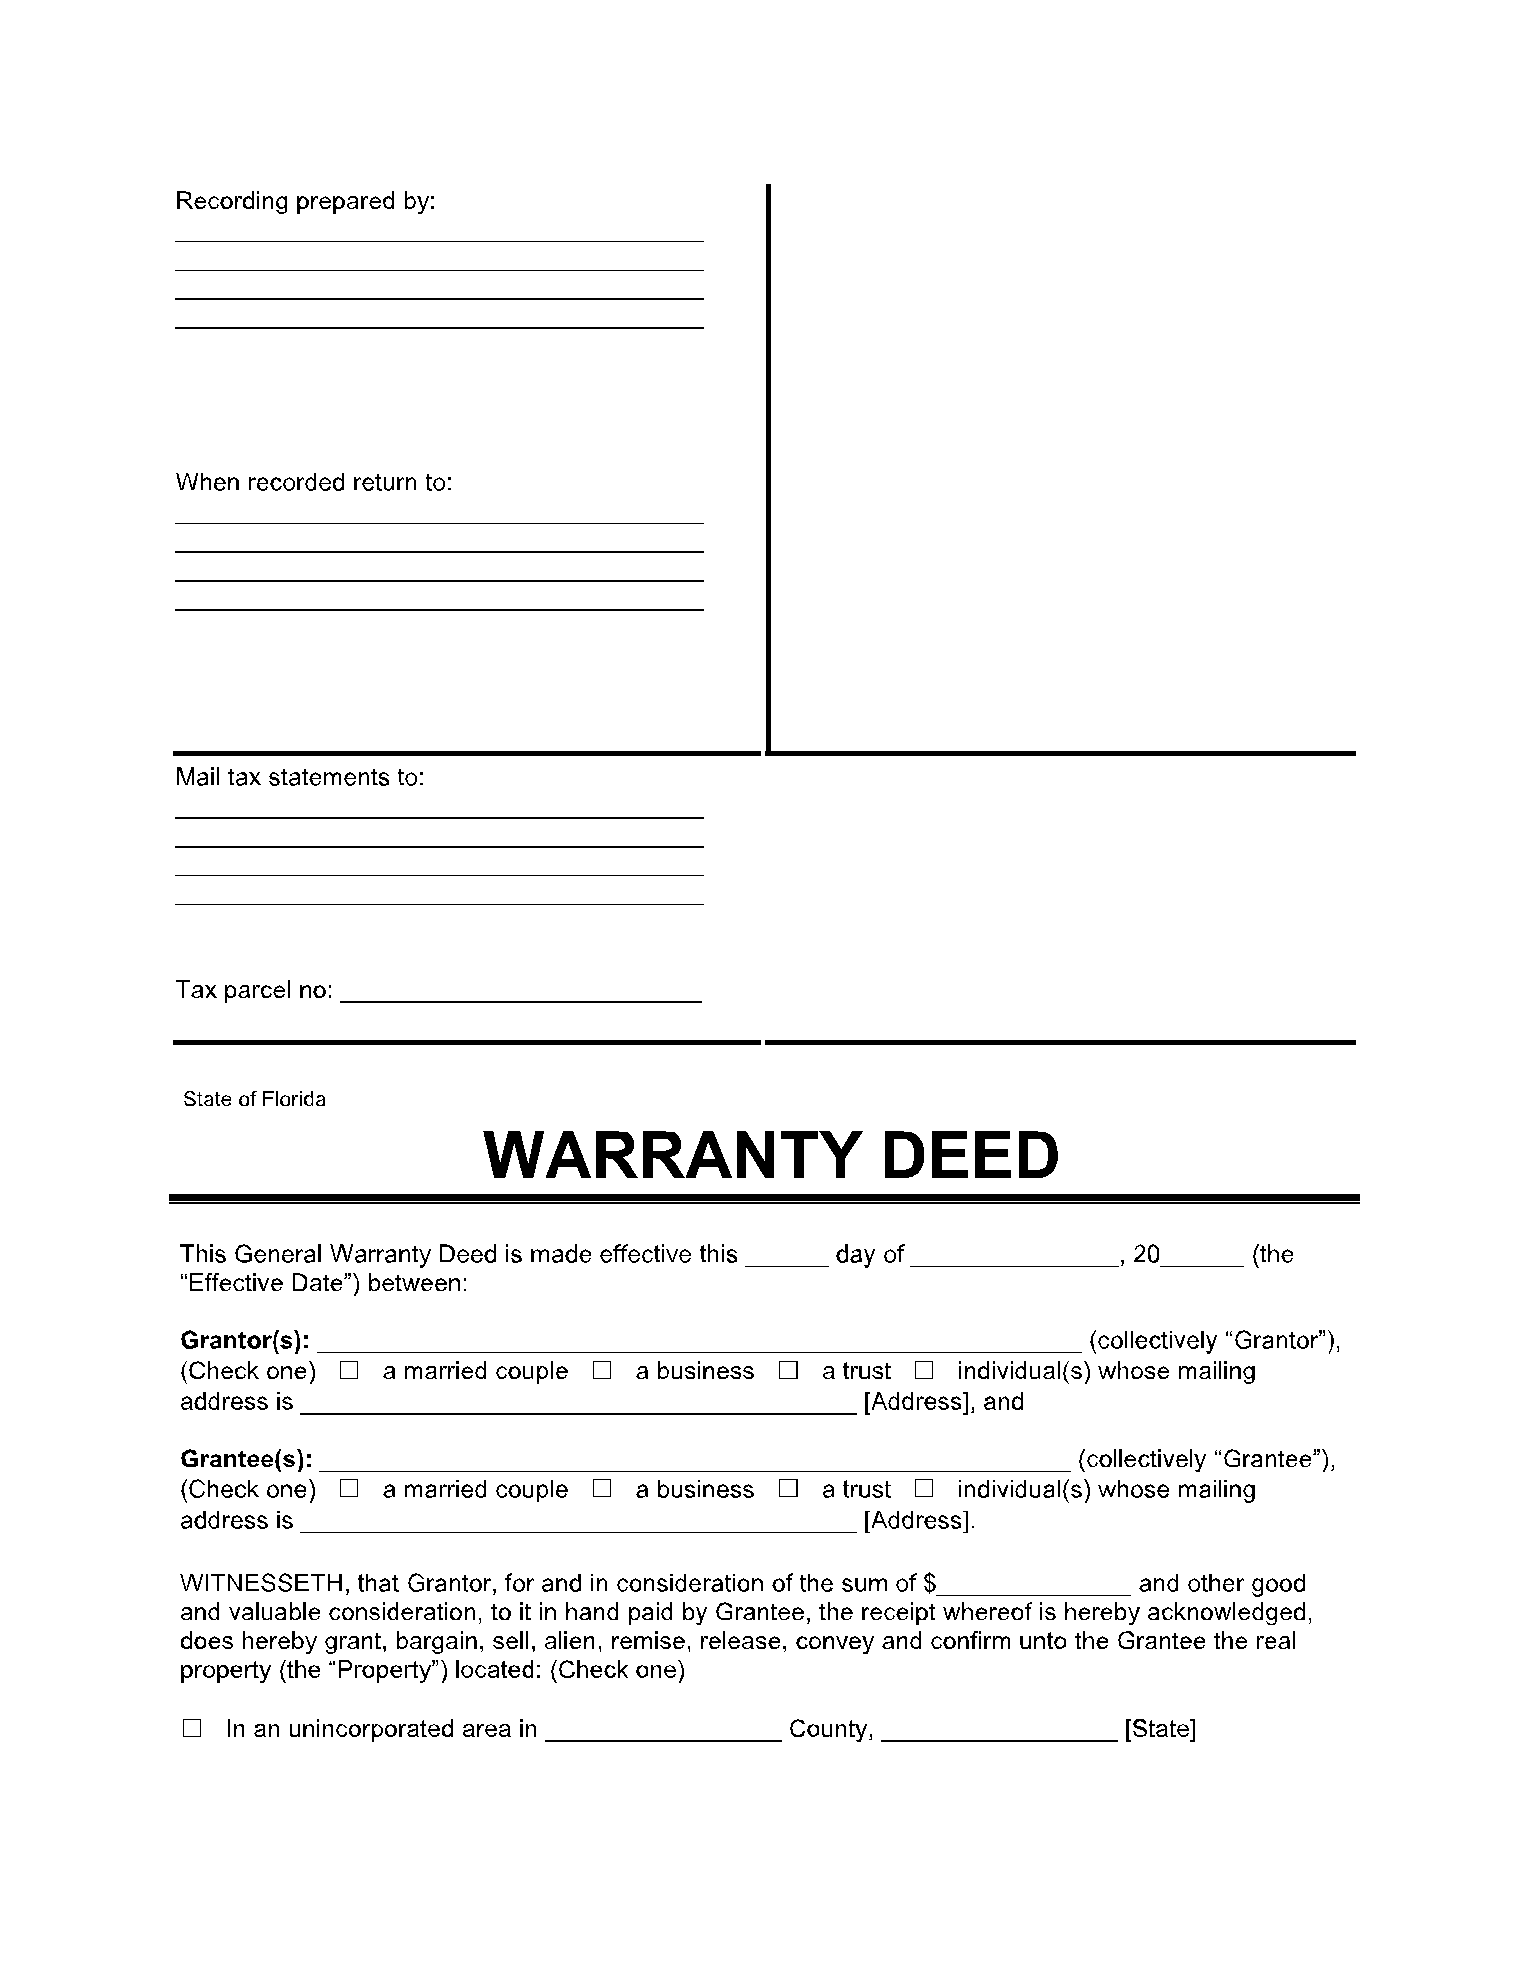 Templates of Warranty Deed Florida